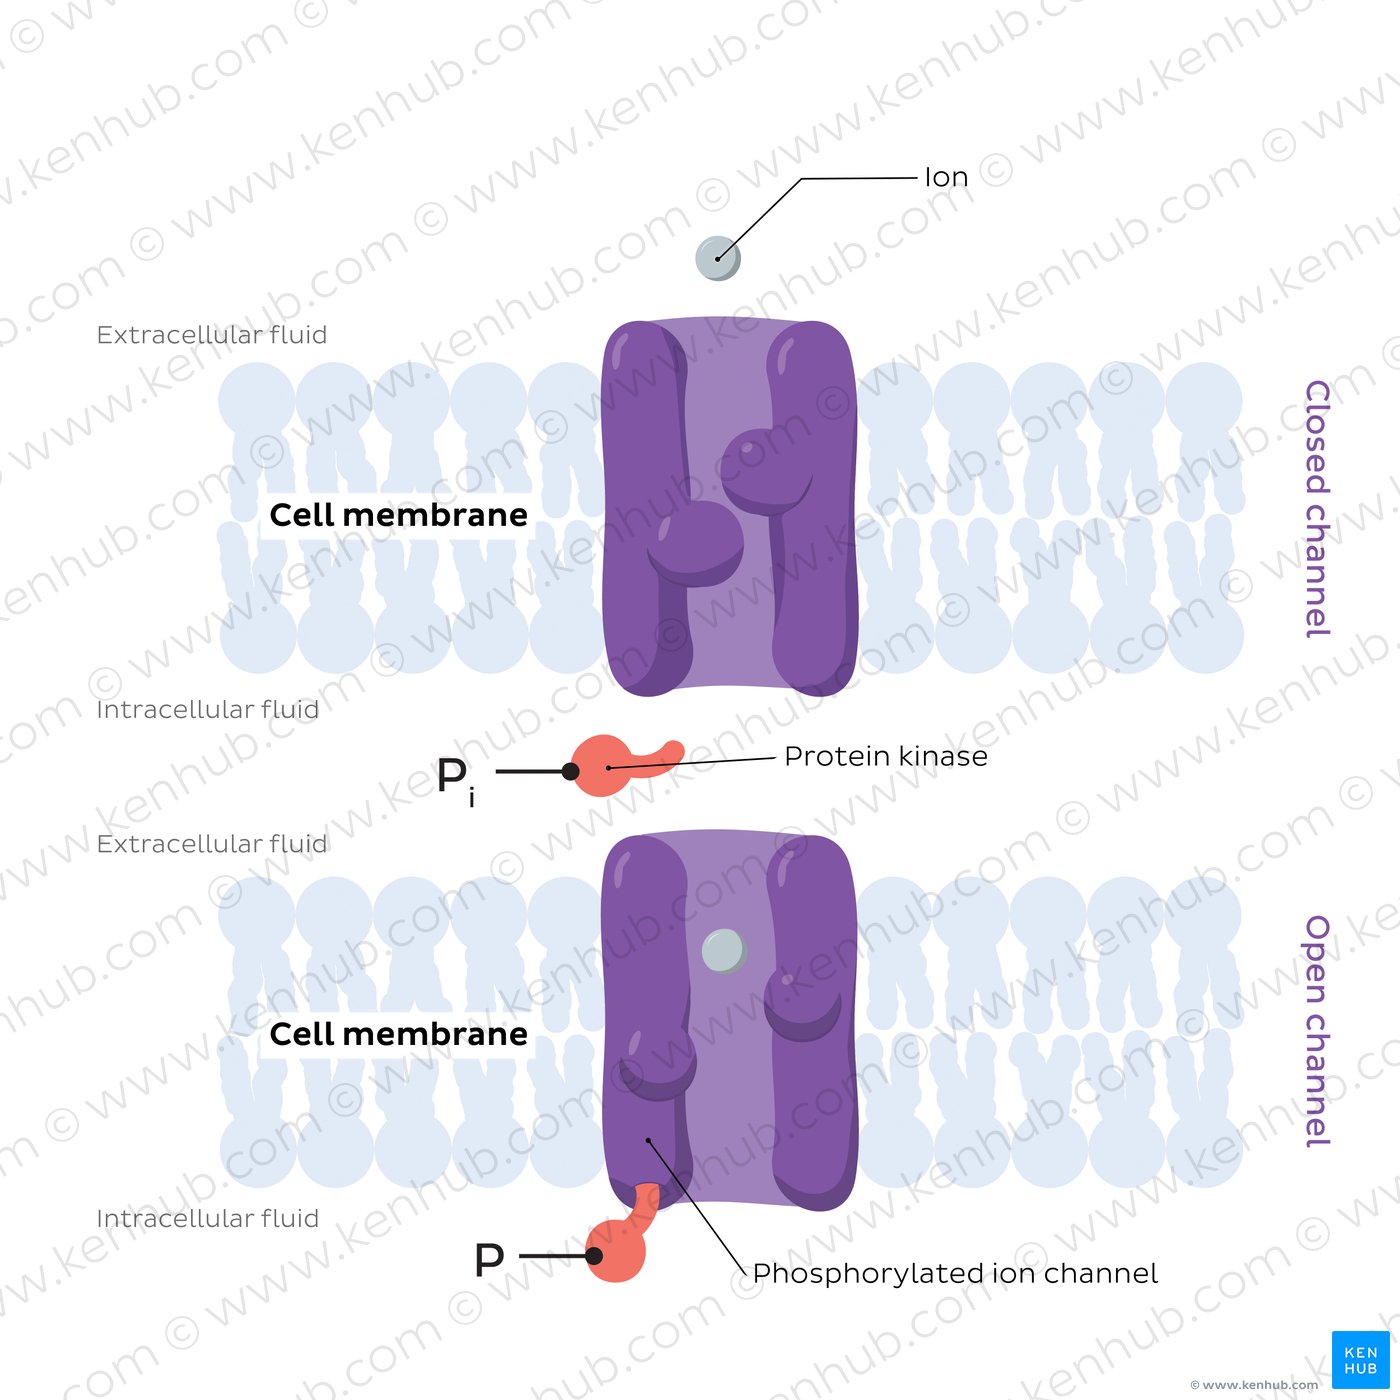 Phosphorylation-gated ion channels